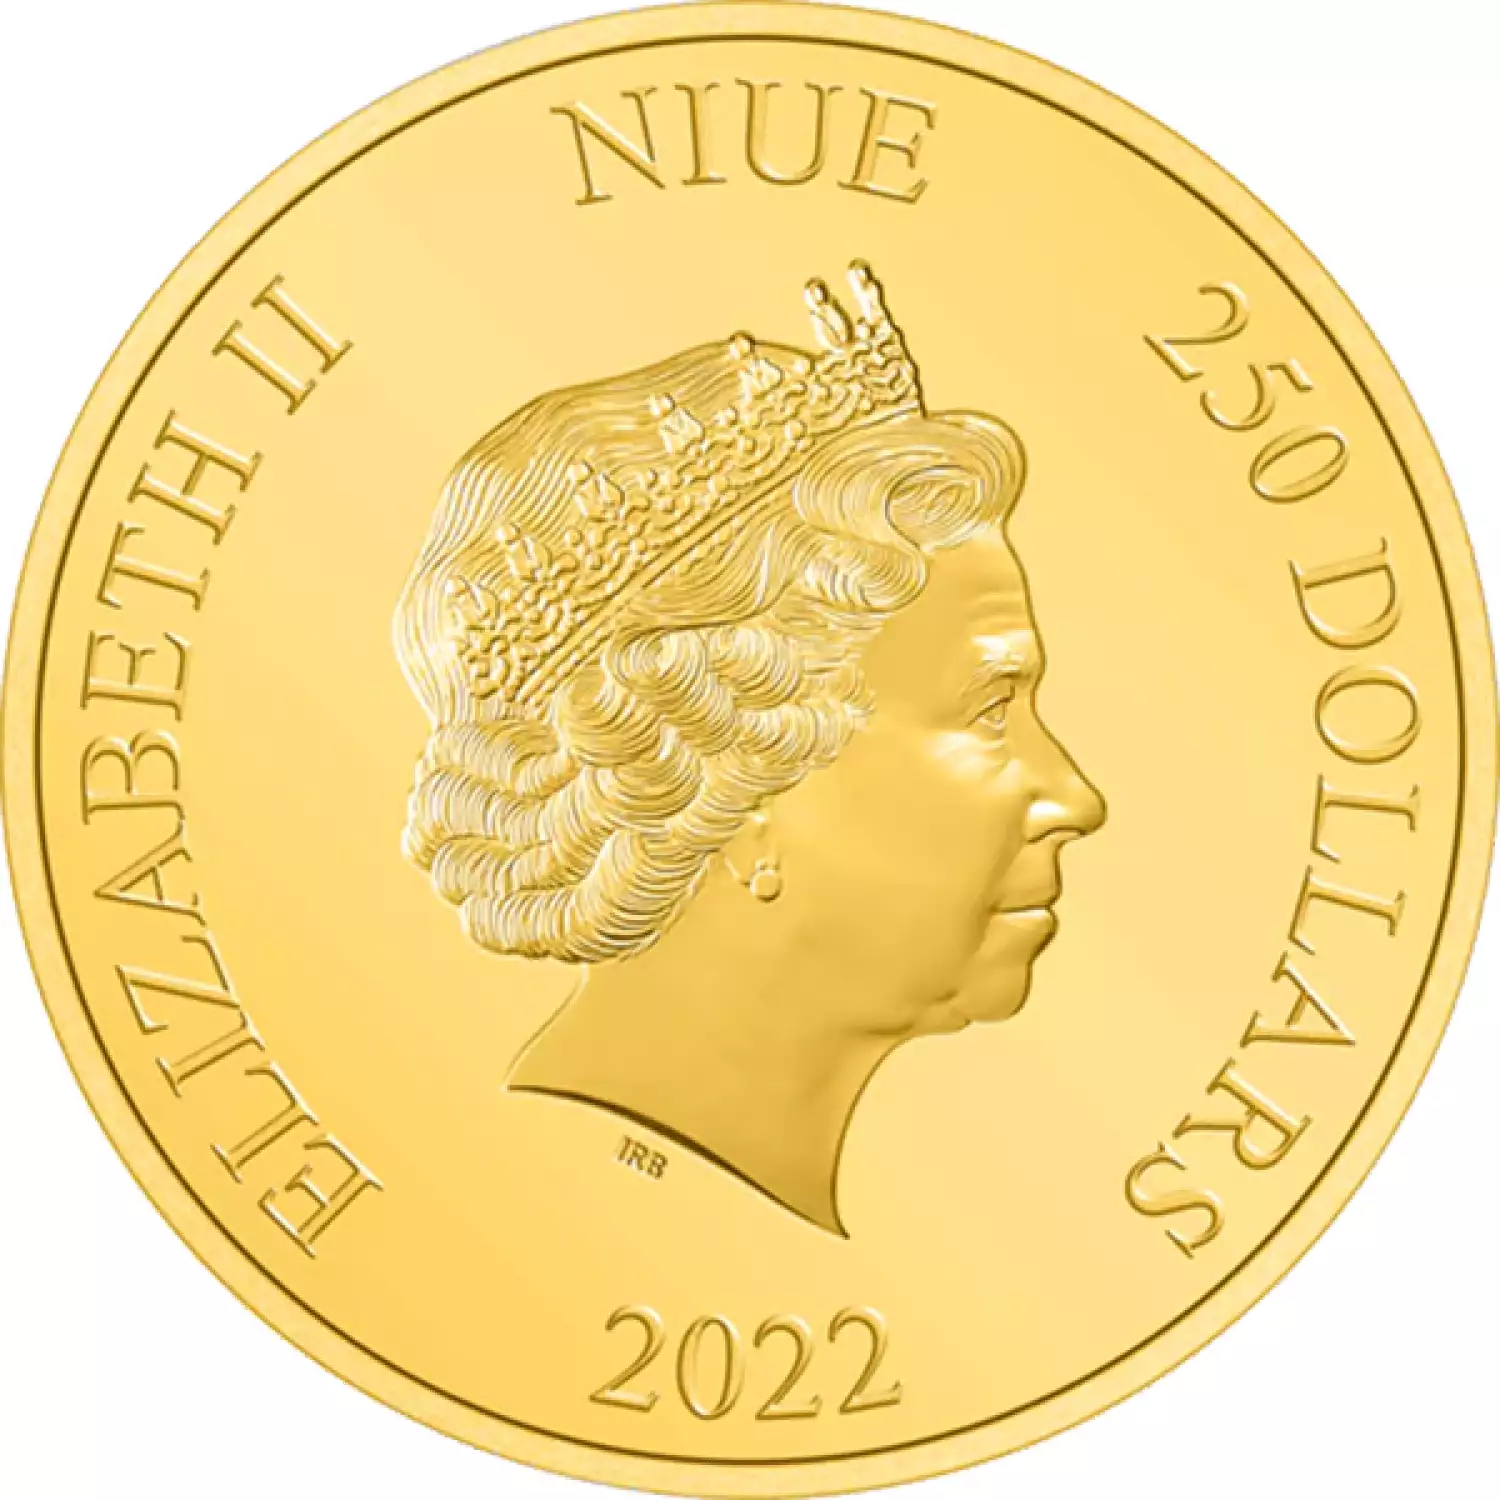 THE FLASH - 2022 1oz Gold Coin (3)